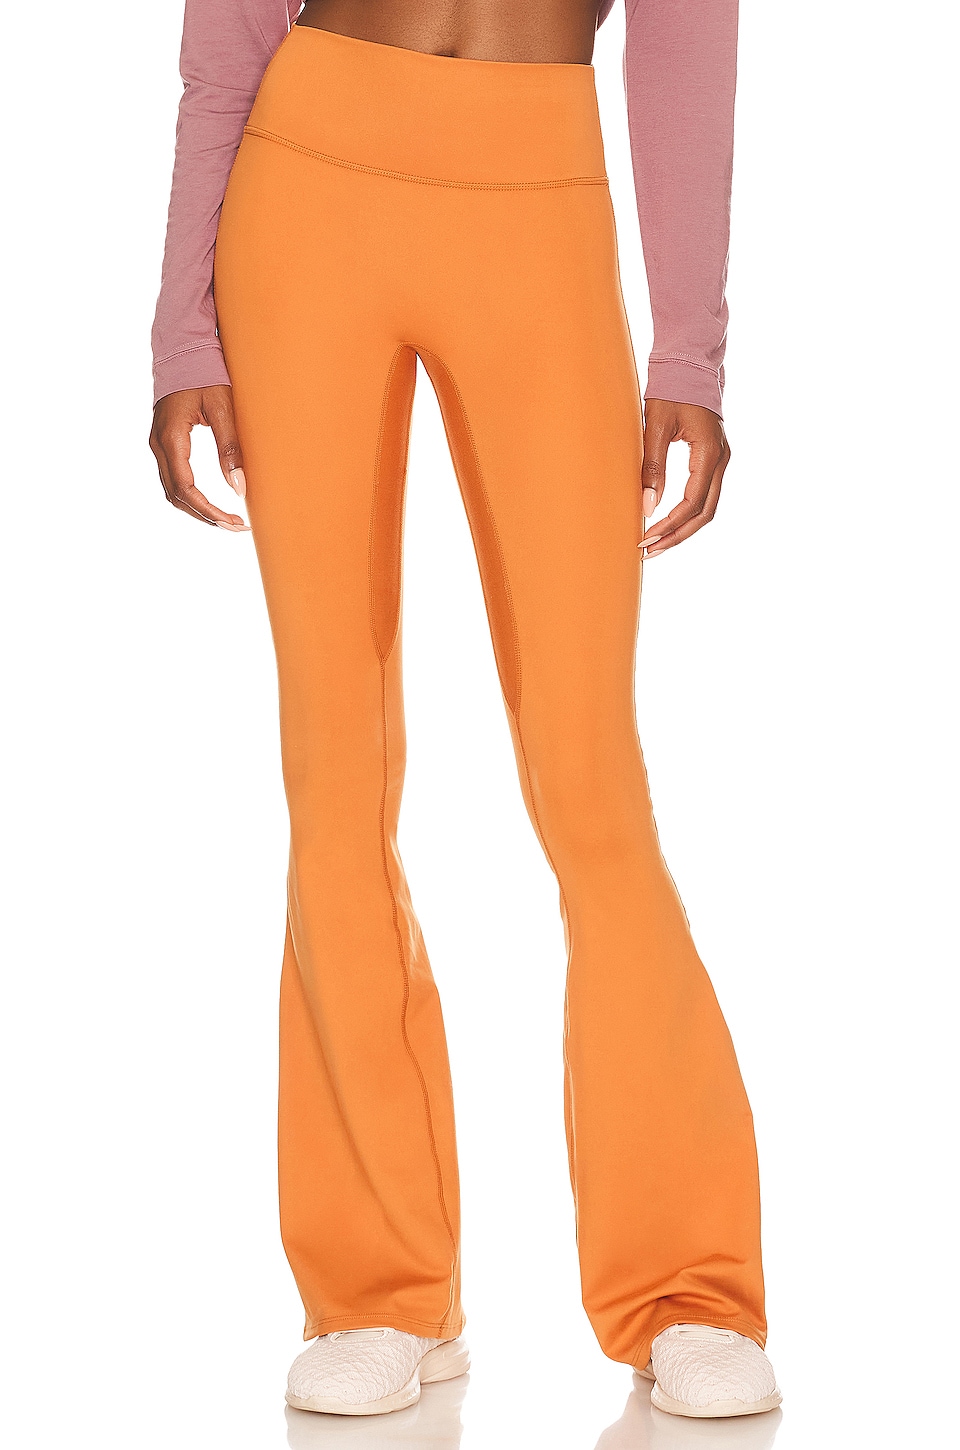 Revolve Women Clothing Pants Leggings FlowWell Callista Pant in Burnt Orange. 